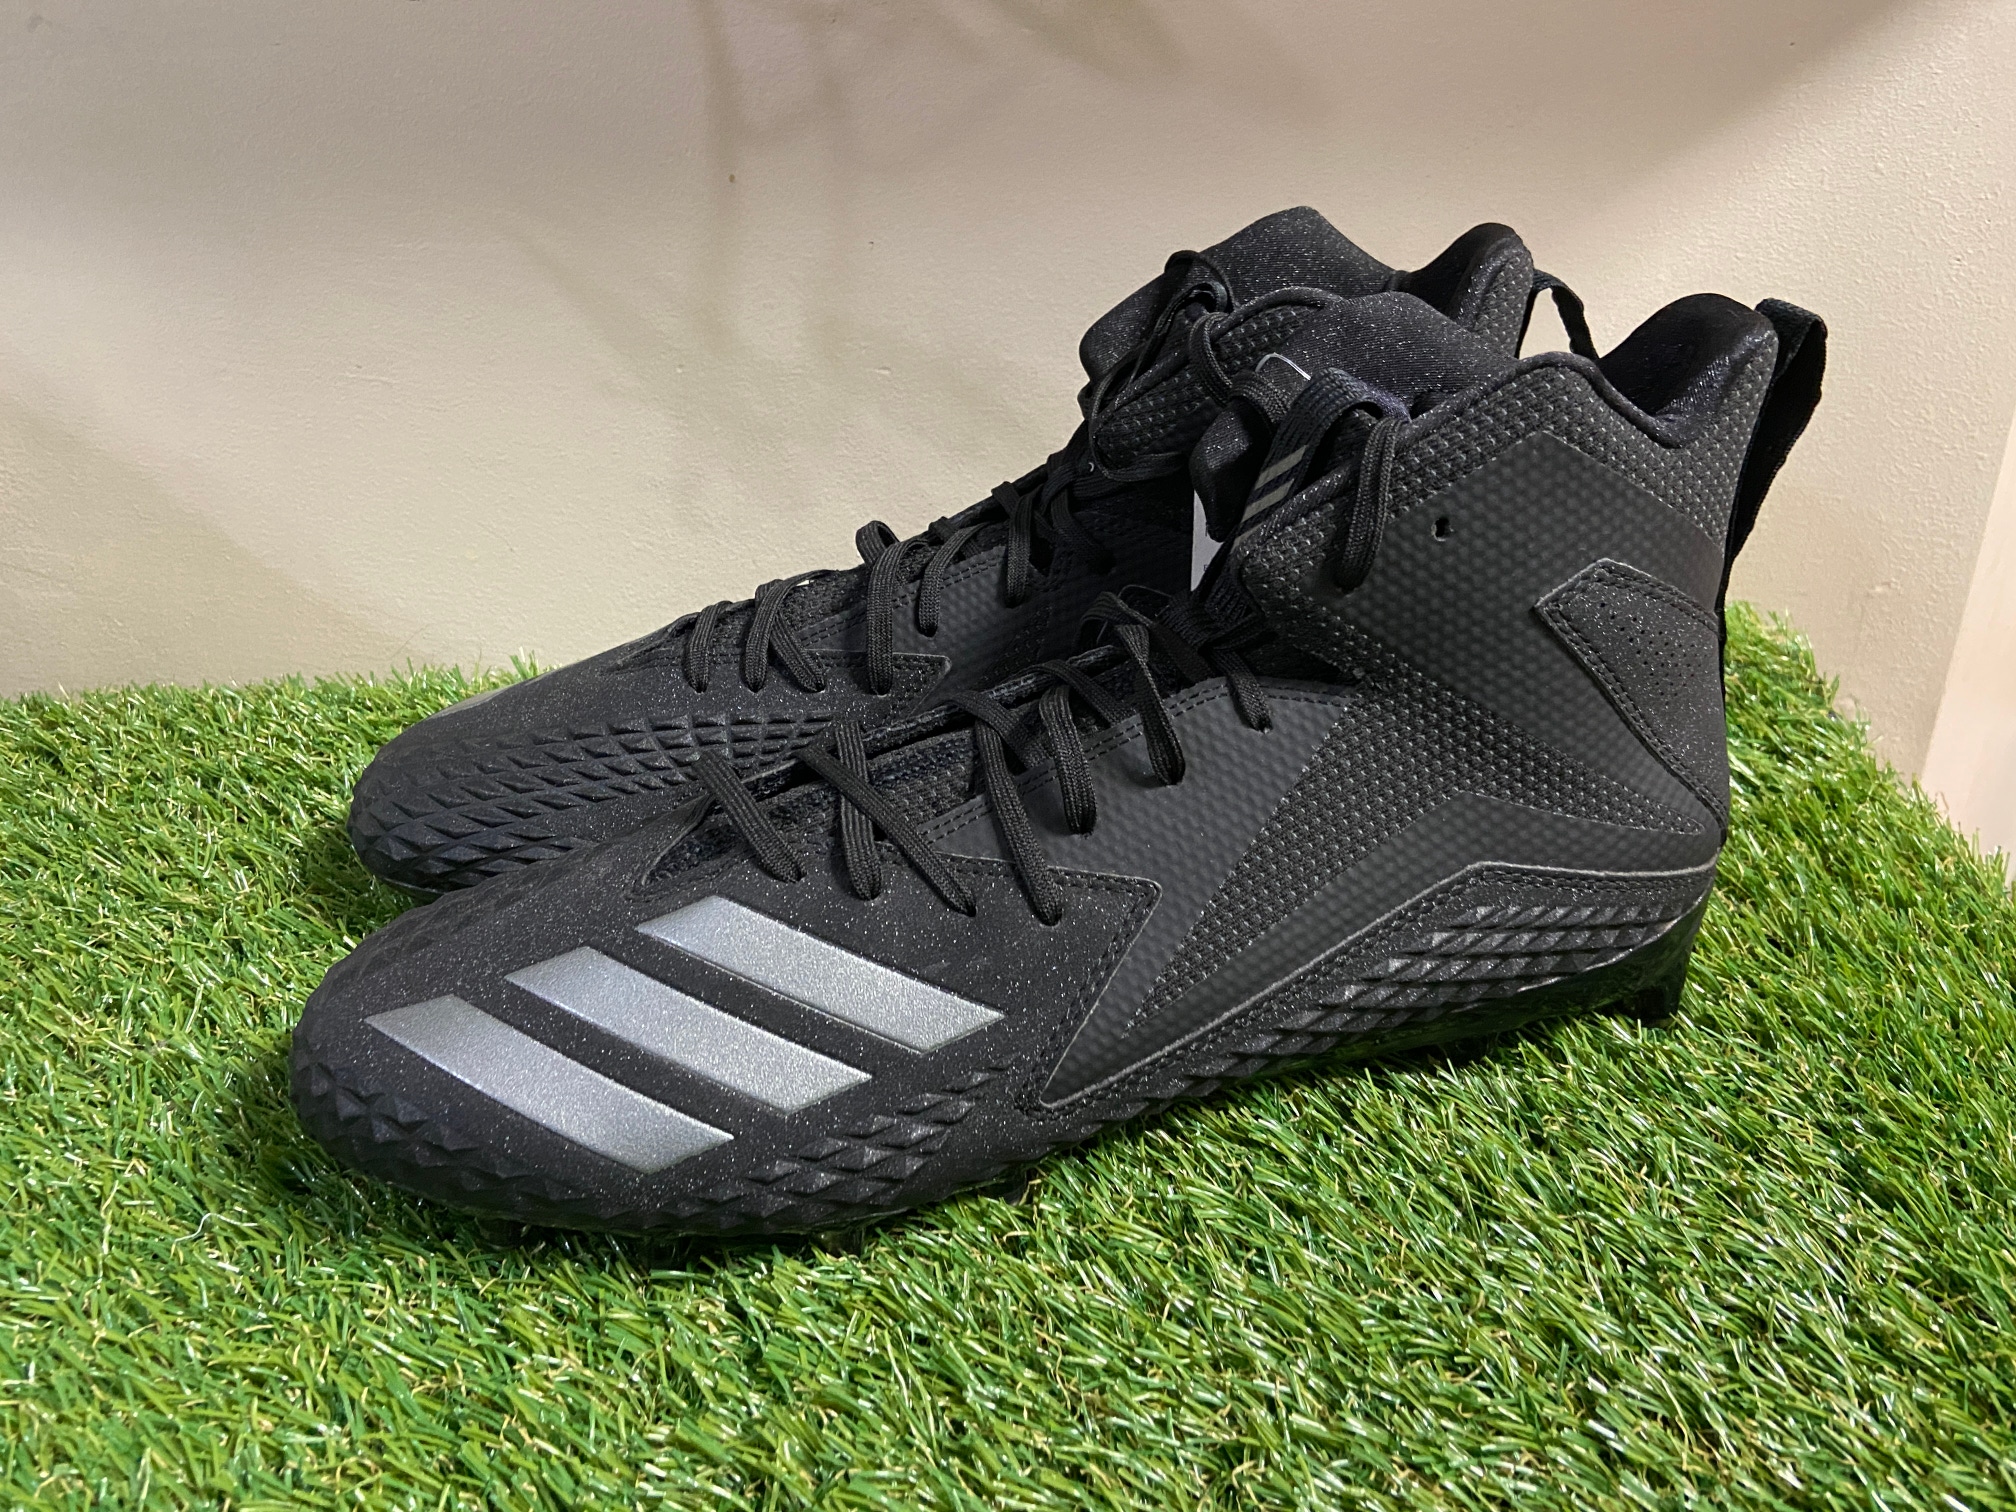 Adidas Freak X Carbon Mid Black Silver Football Cleats Men’s Size 14 CG4404 NEW